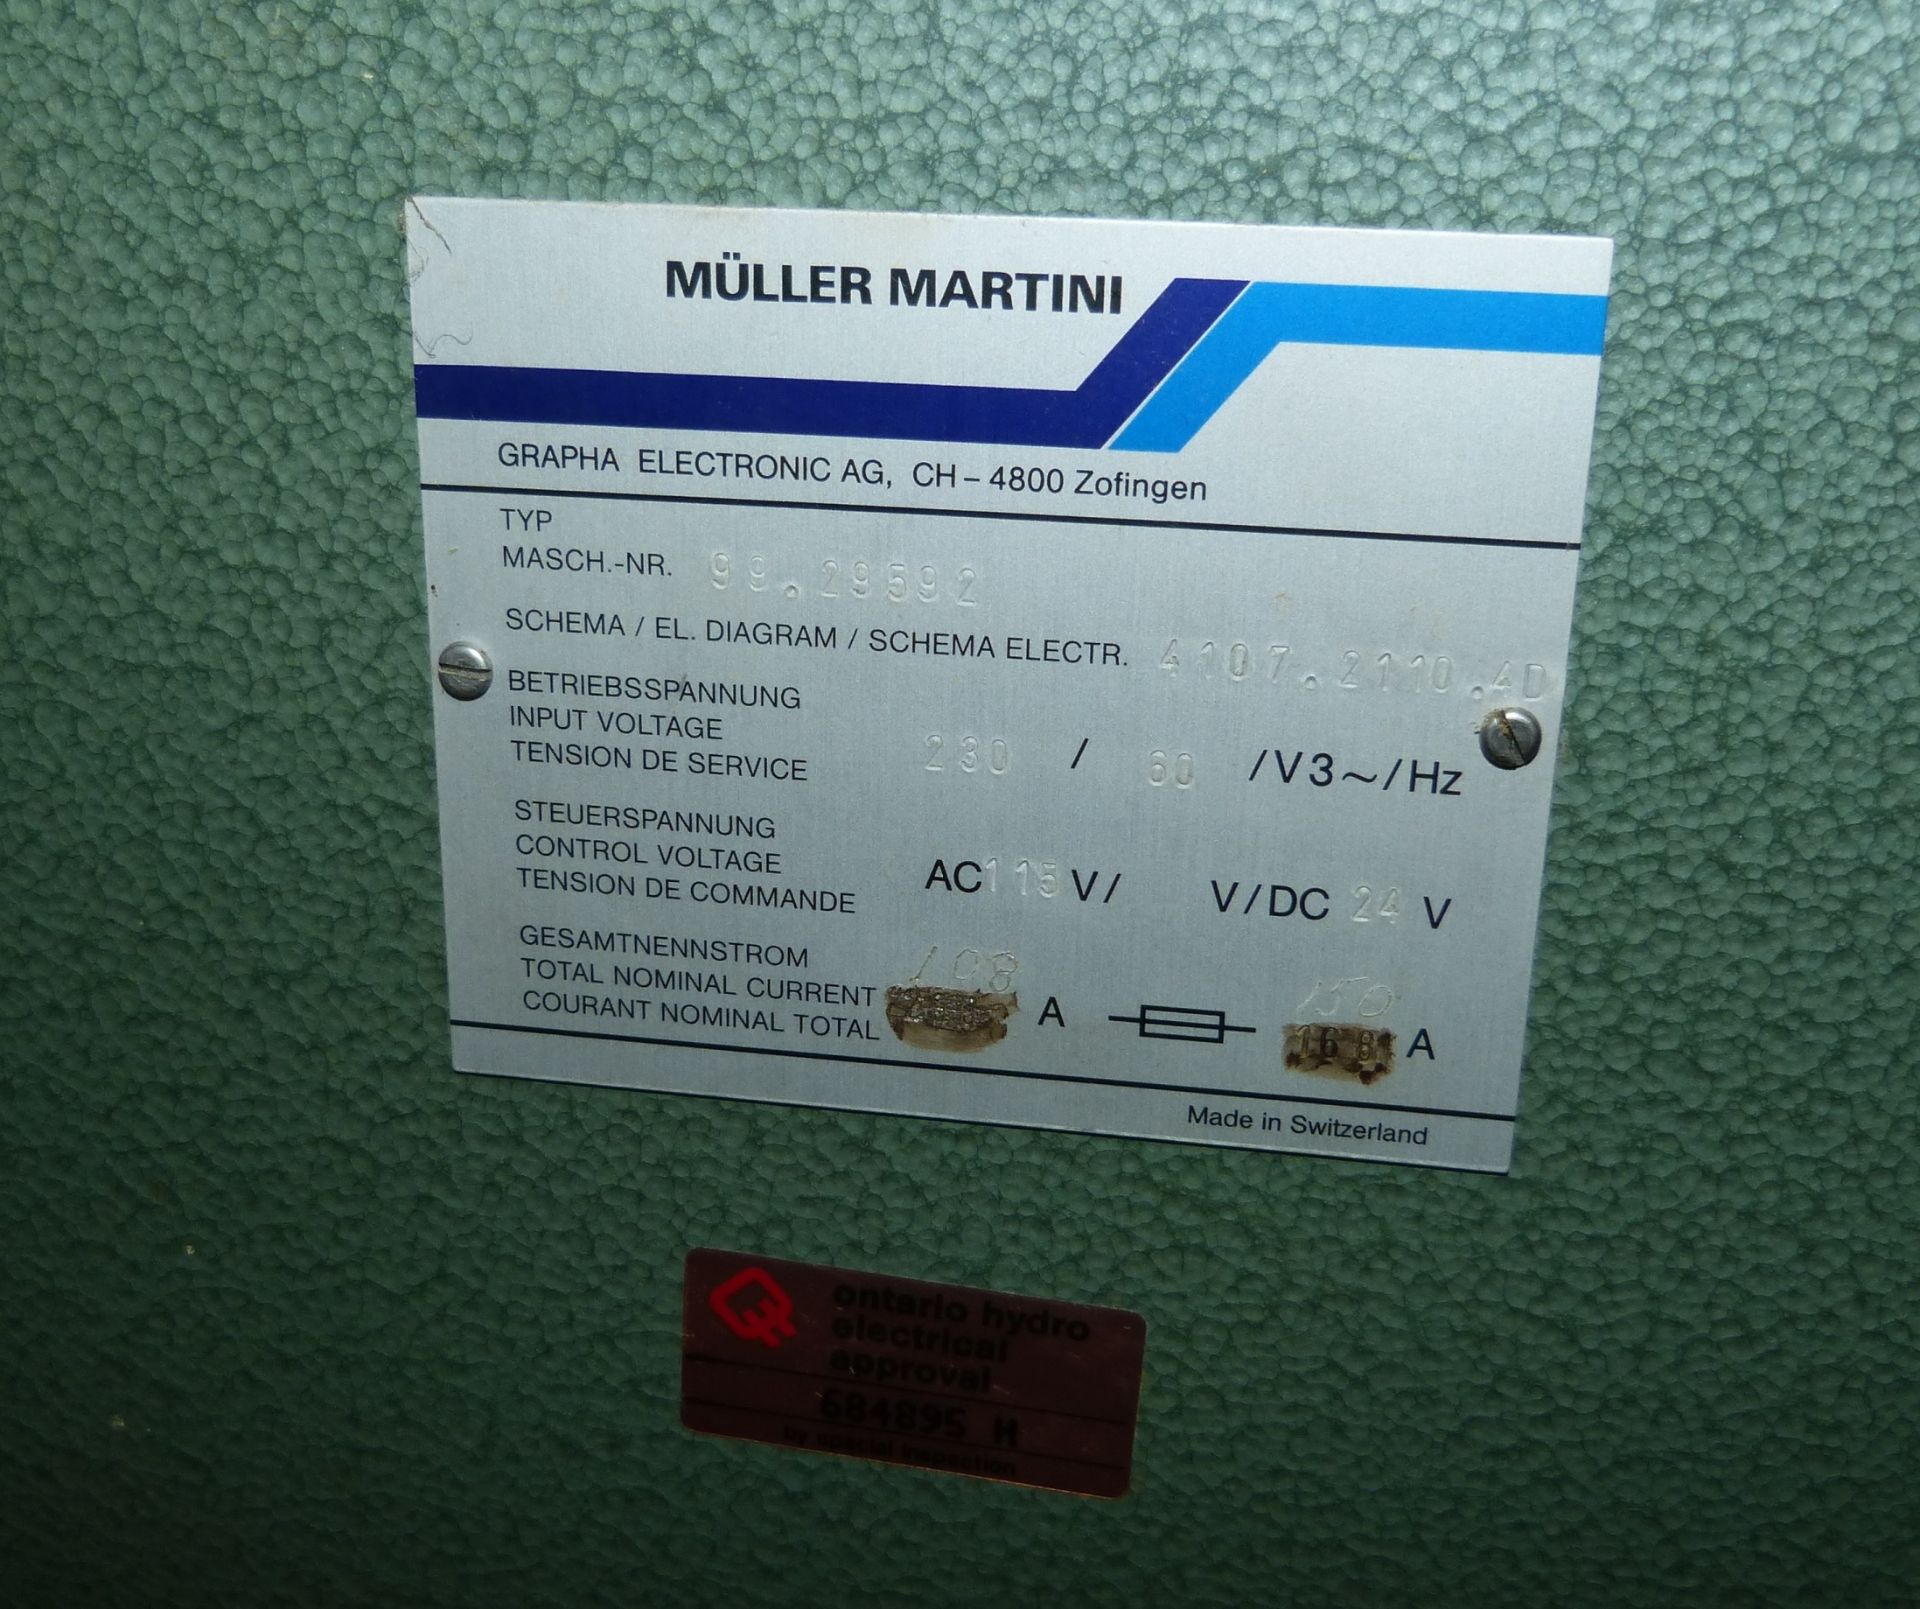 MULLER-MARTINI PERFECT BINDER, MODEL MONOSTAR 3006, YR. 1991 - Image 12 of 17